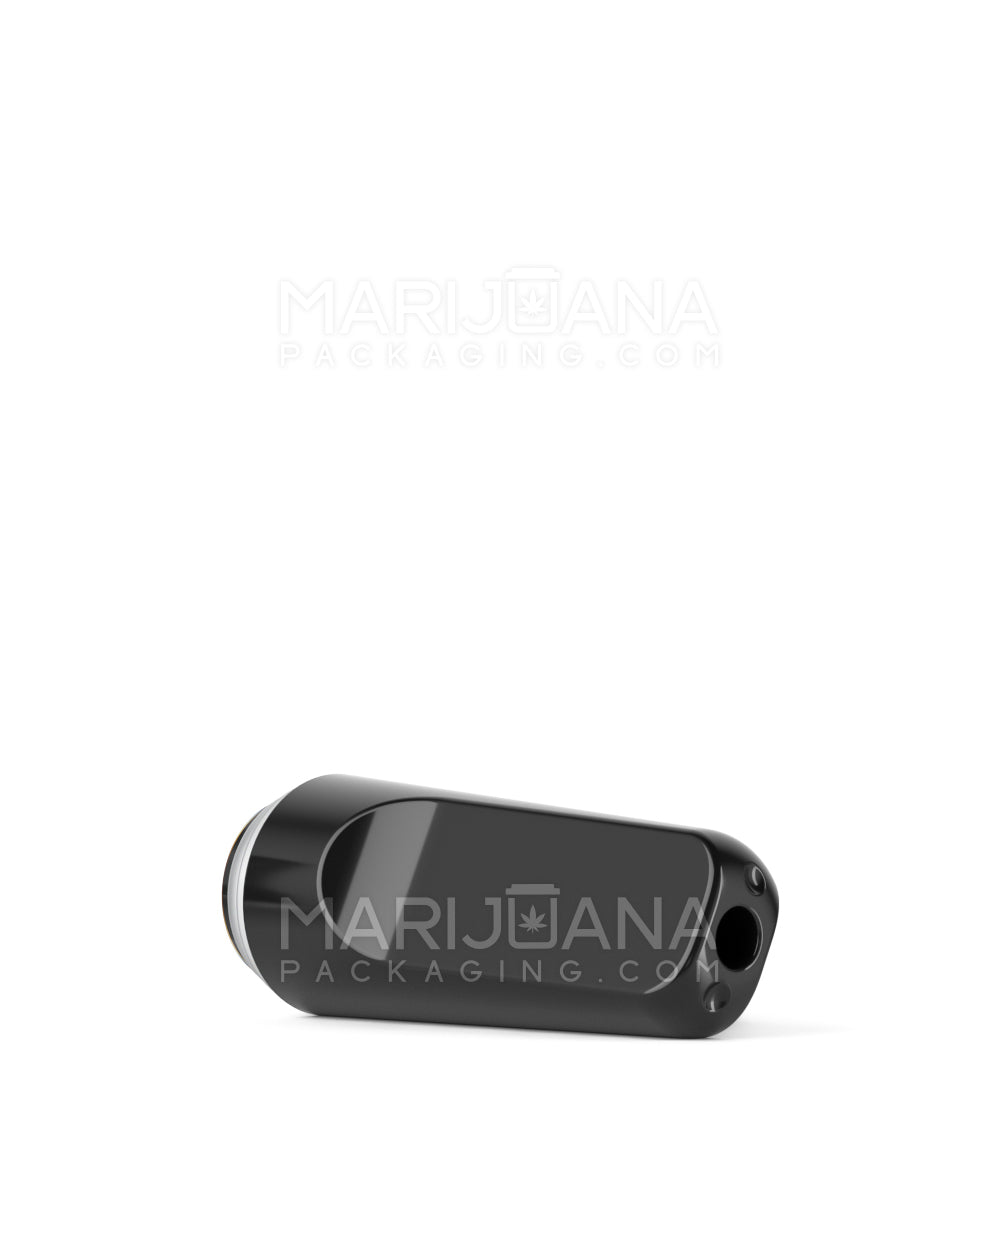 RAE | Flat Vape Mouthpiece for Hand Press Plastic Cartridges | Black Plastic - Hand Press - 400 Count - 5